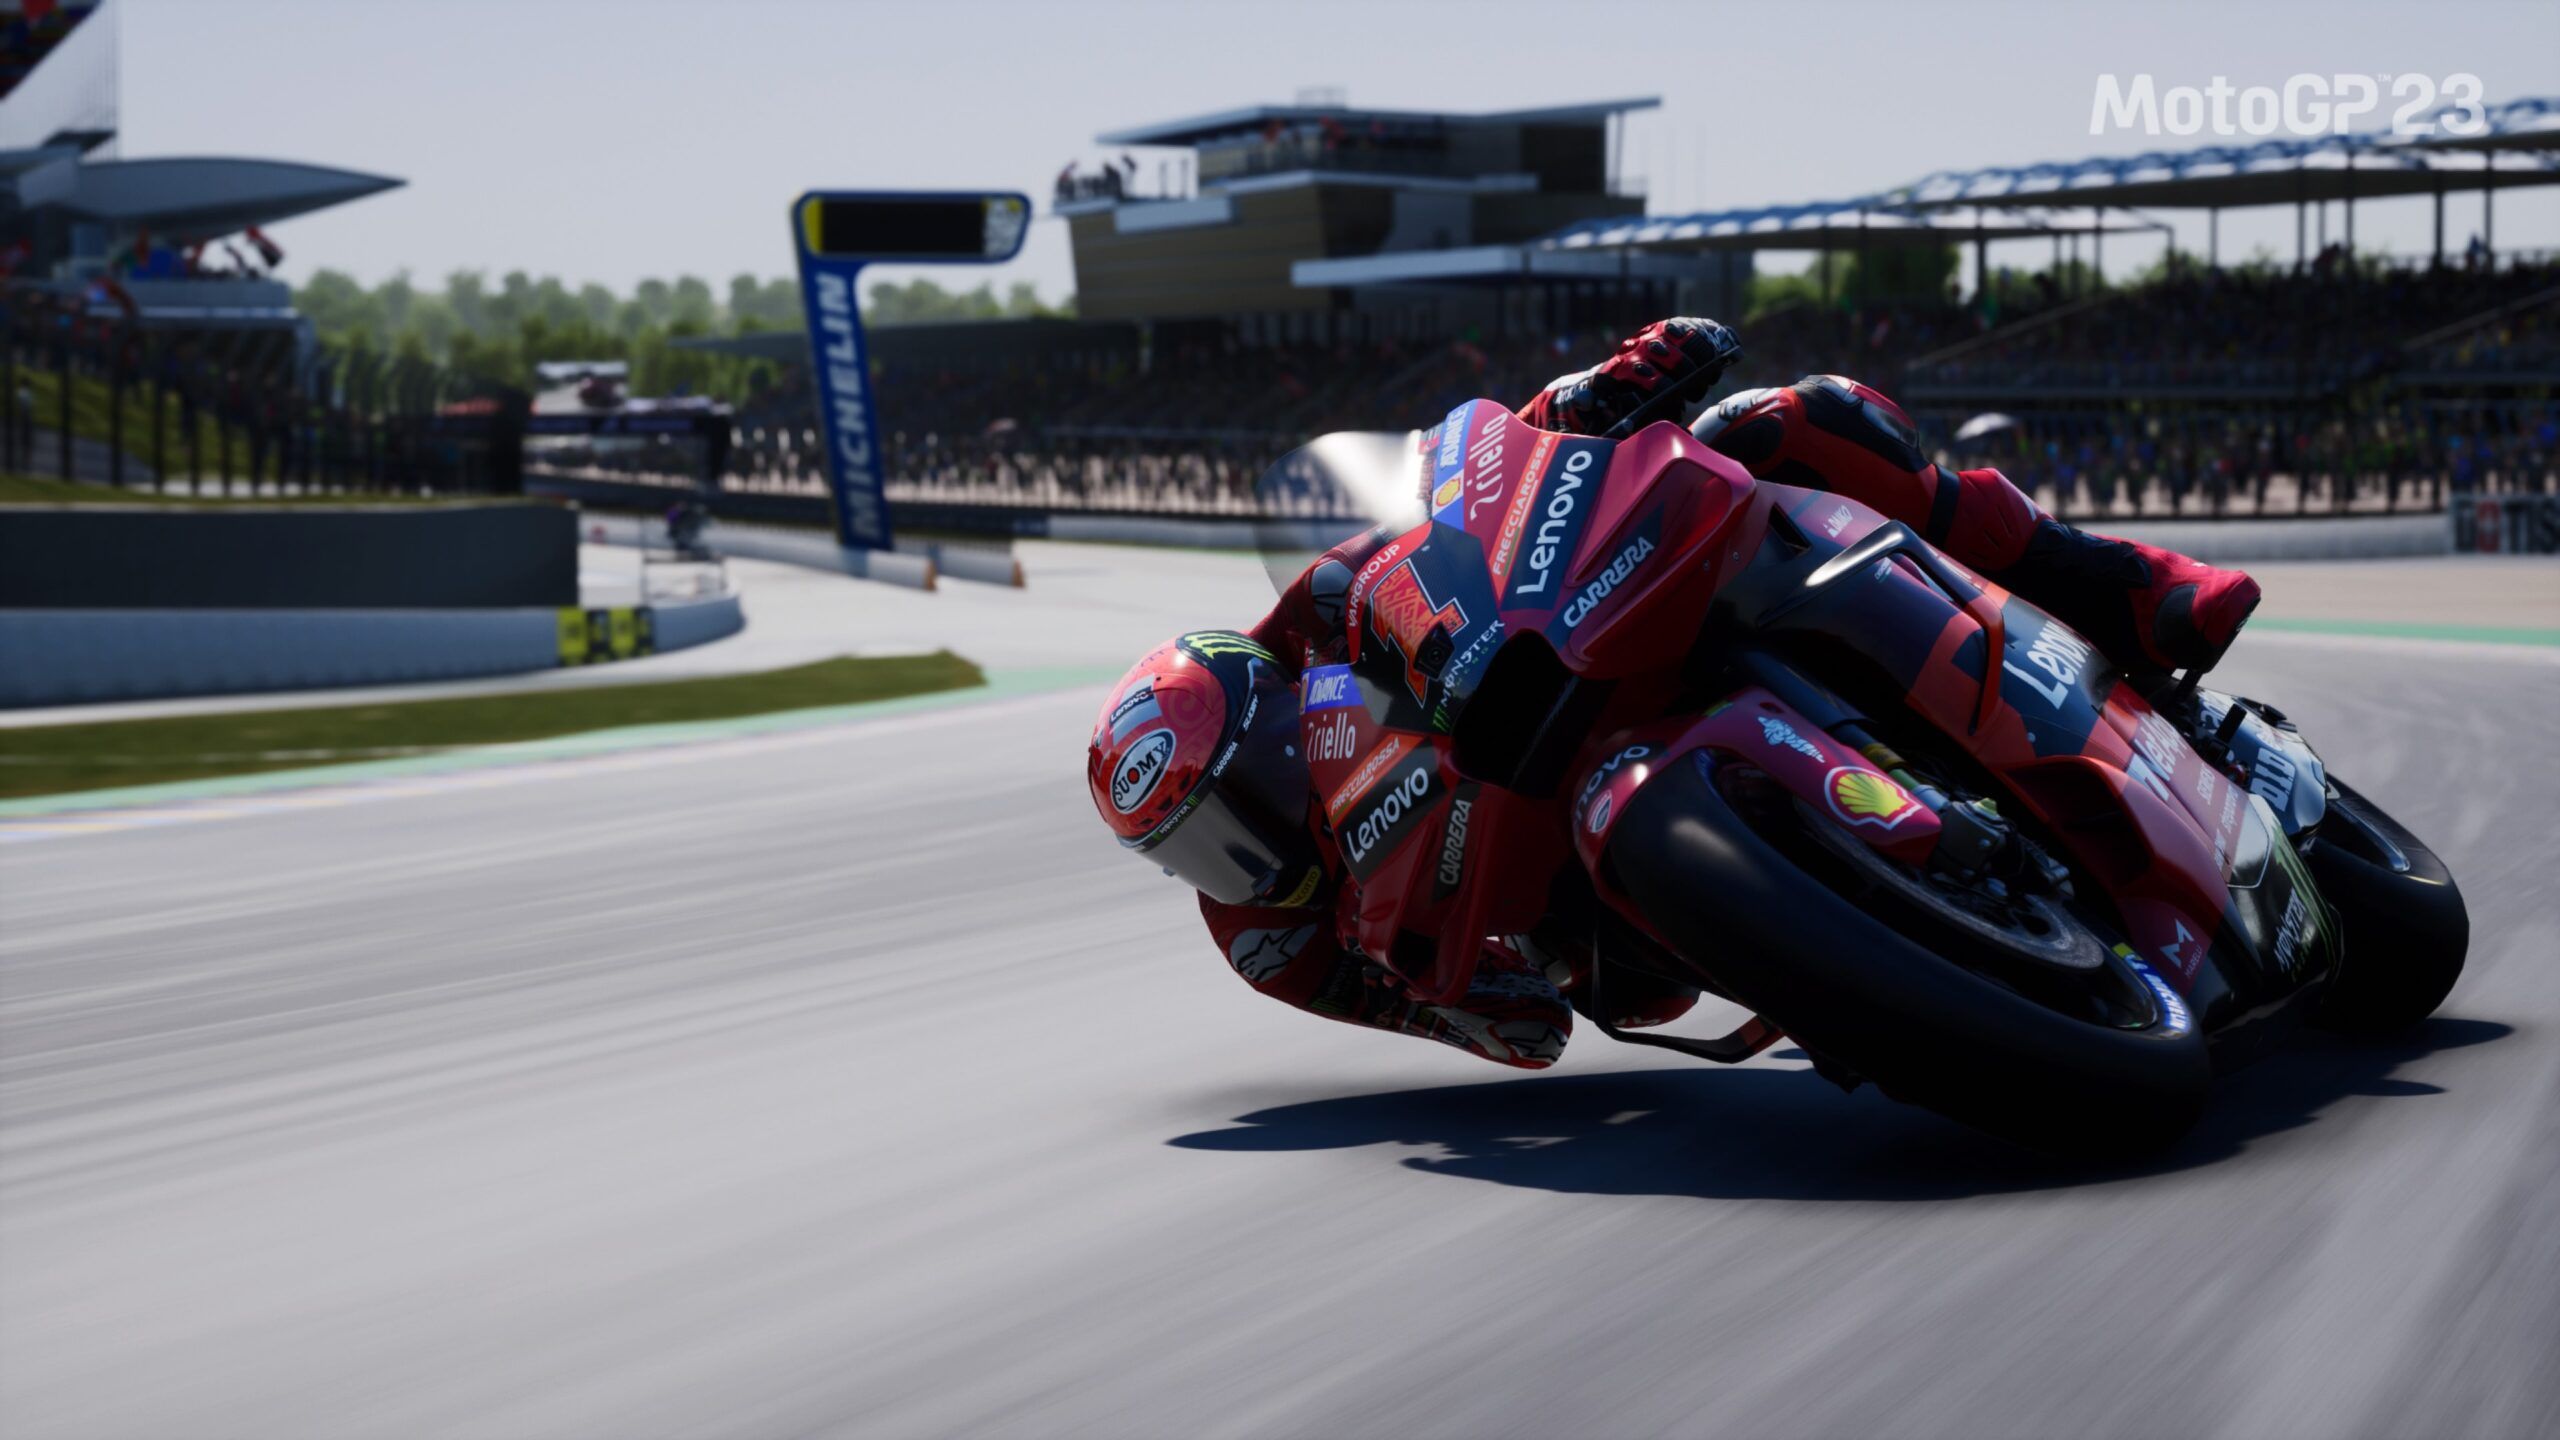 https://gametimers.it/wp-content/uploads/2023/06/MotoGP-23-Recensione-Ducati-Le-Mans-scaled.jpg